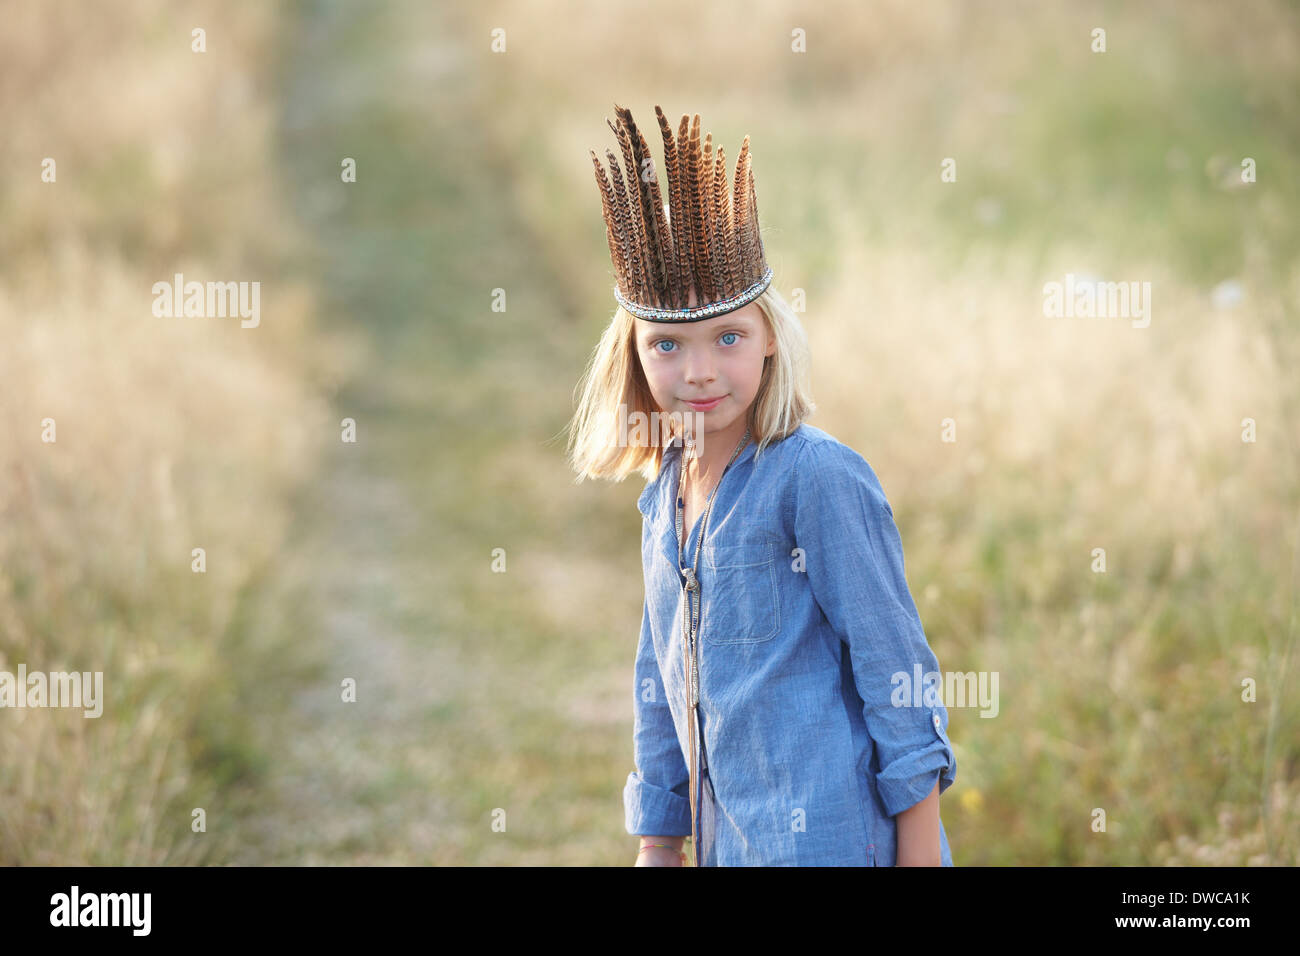 Portrait of girl in native american headdress Stock Photo